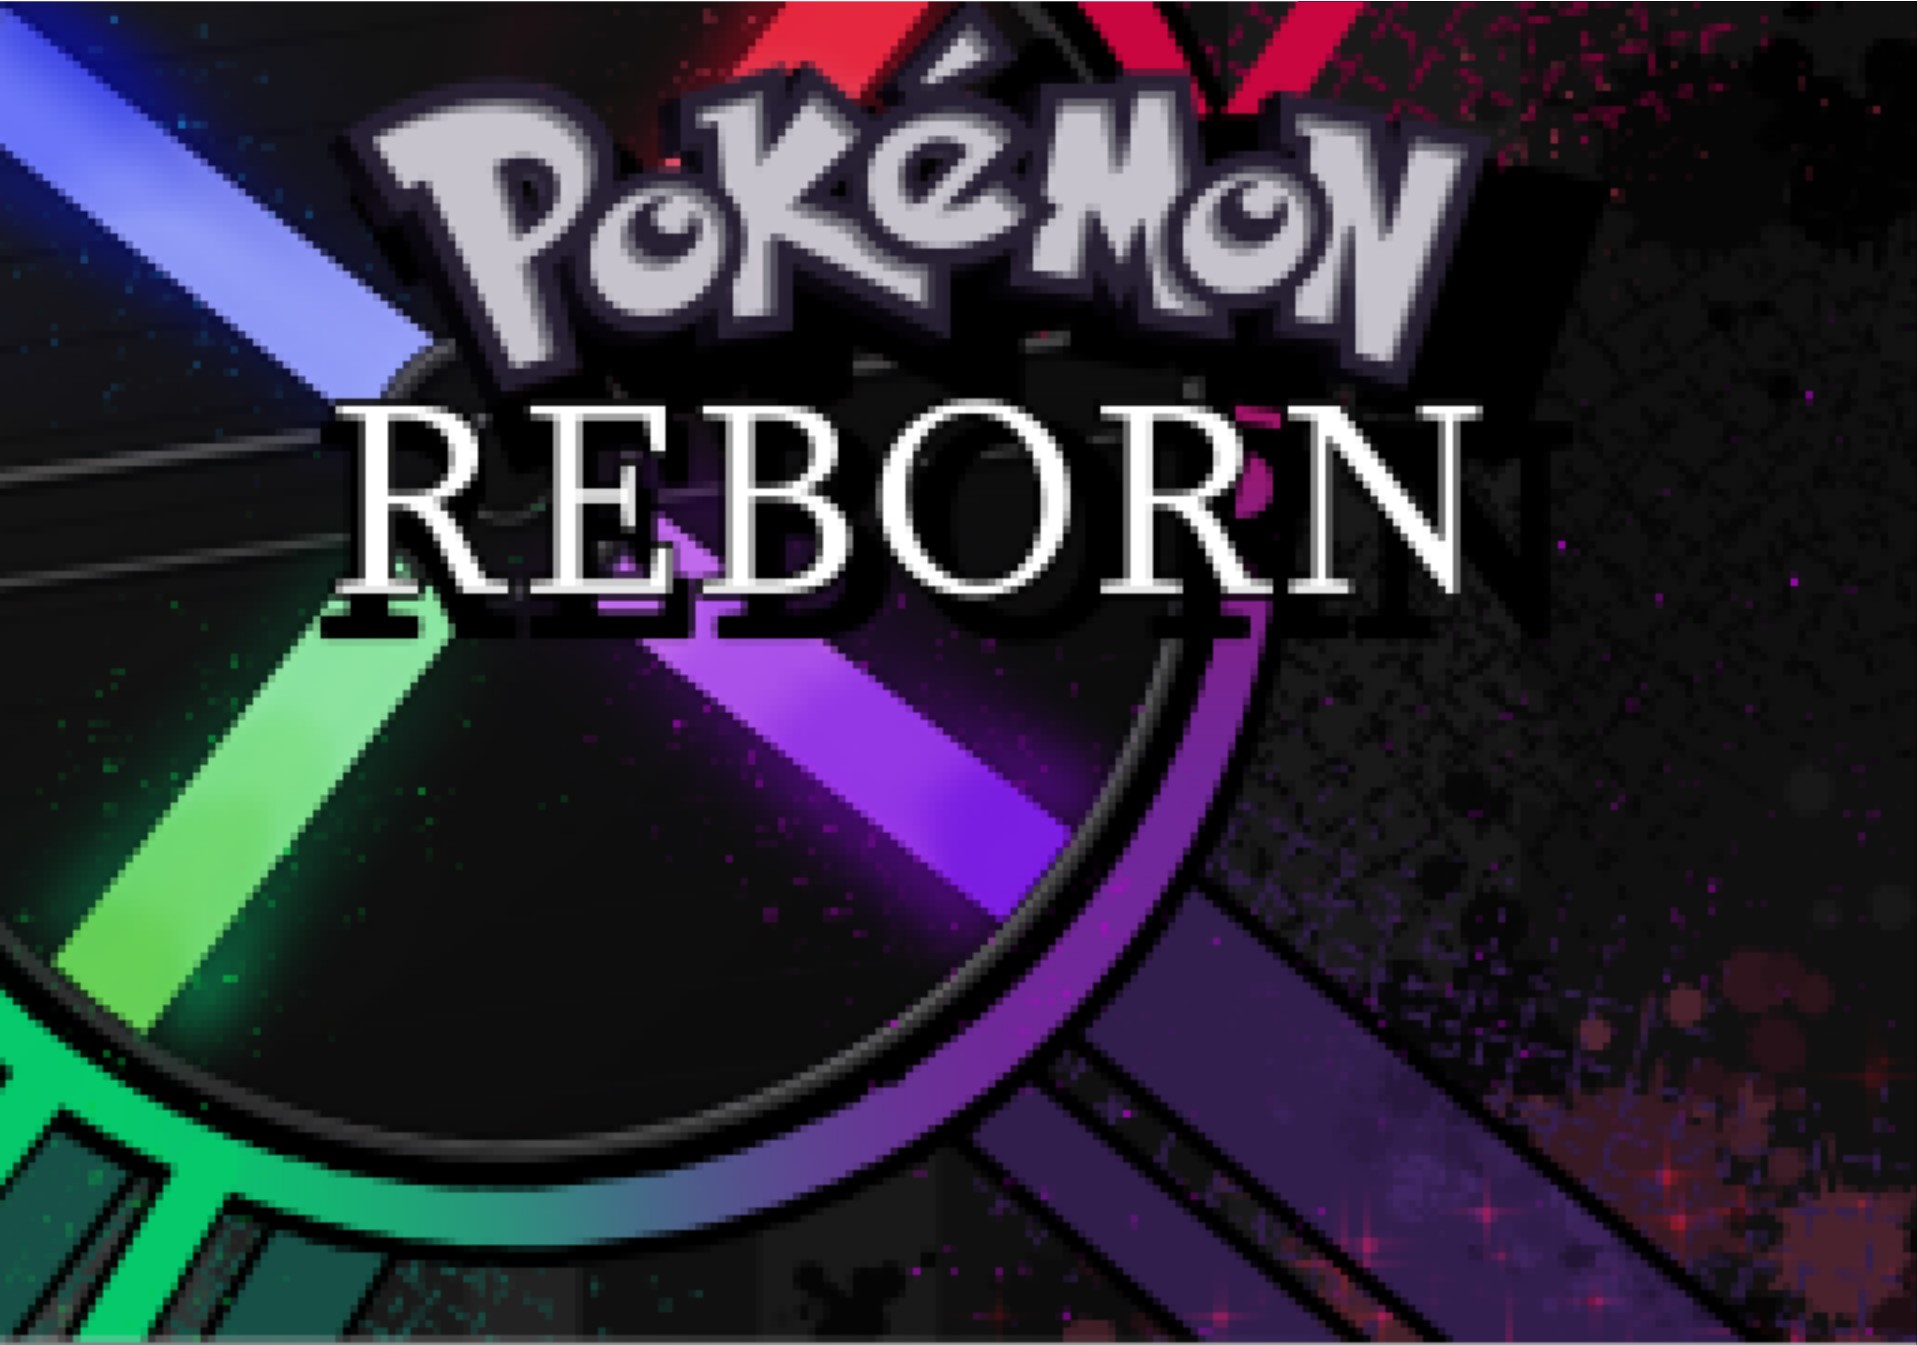 Pokemon Reborn Walkthrough